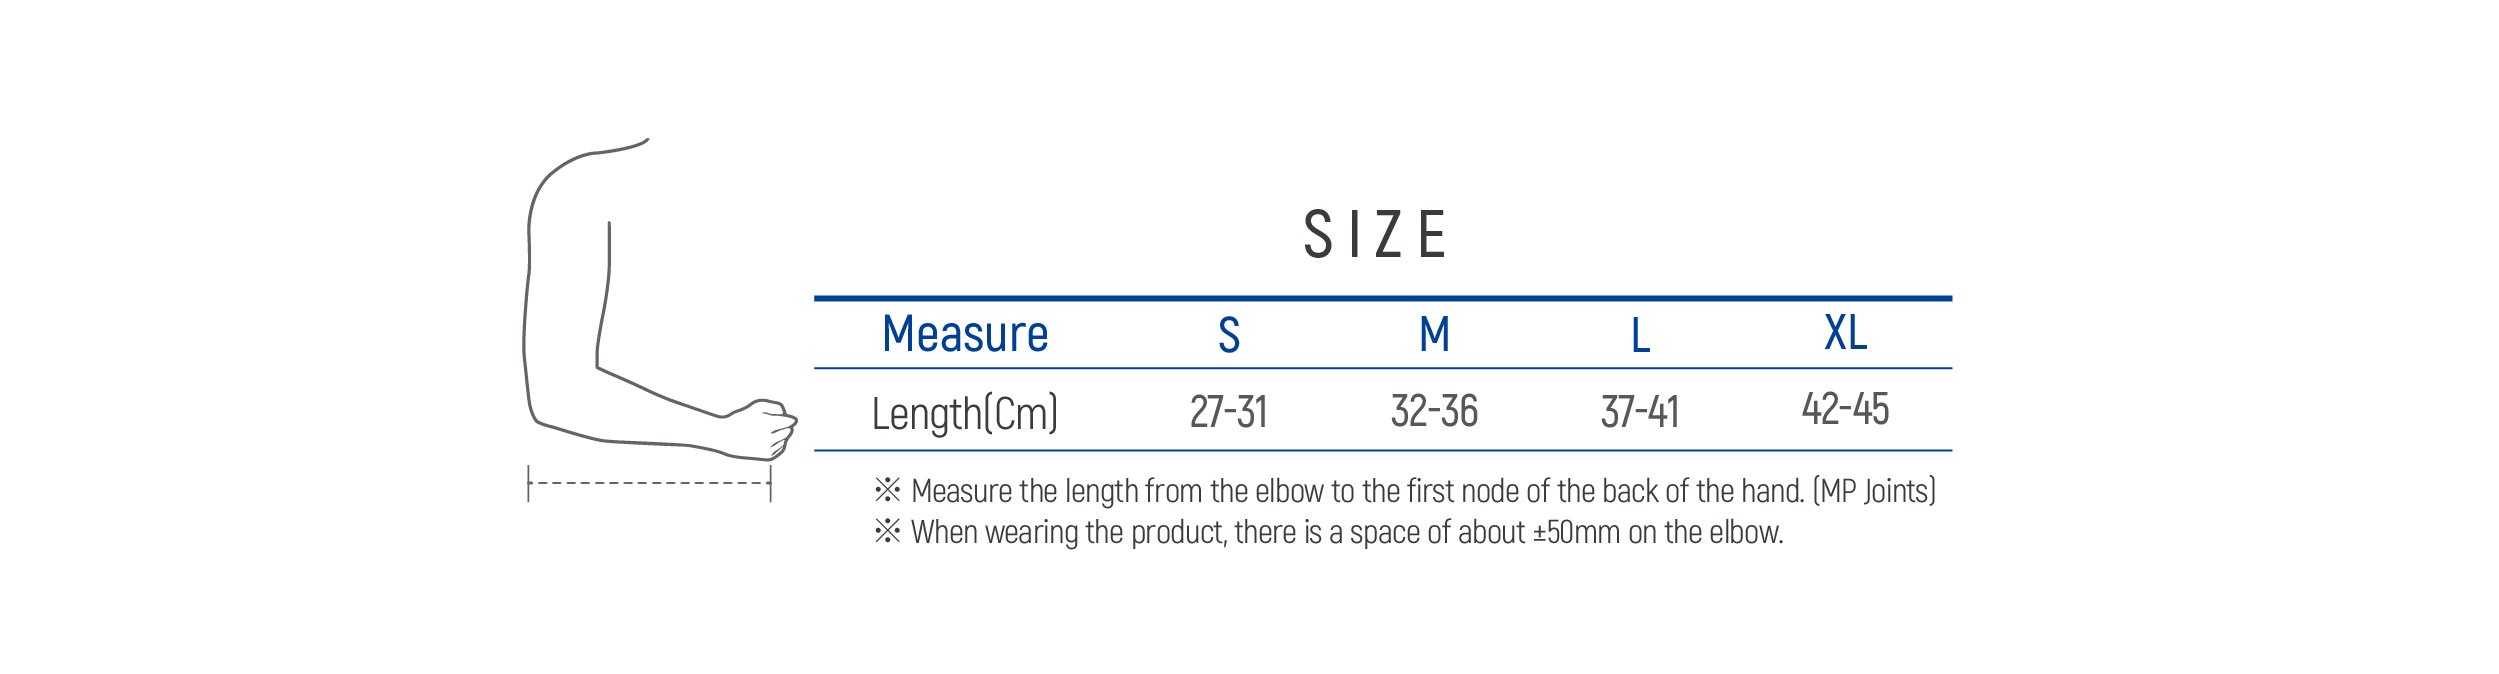 DR-E027 Size table image